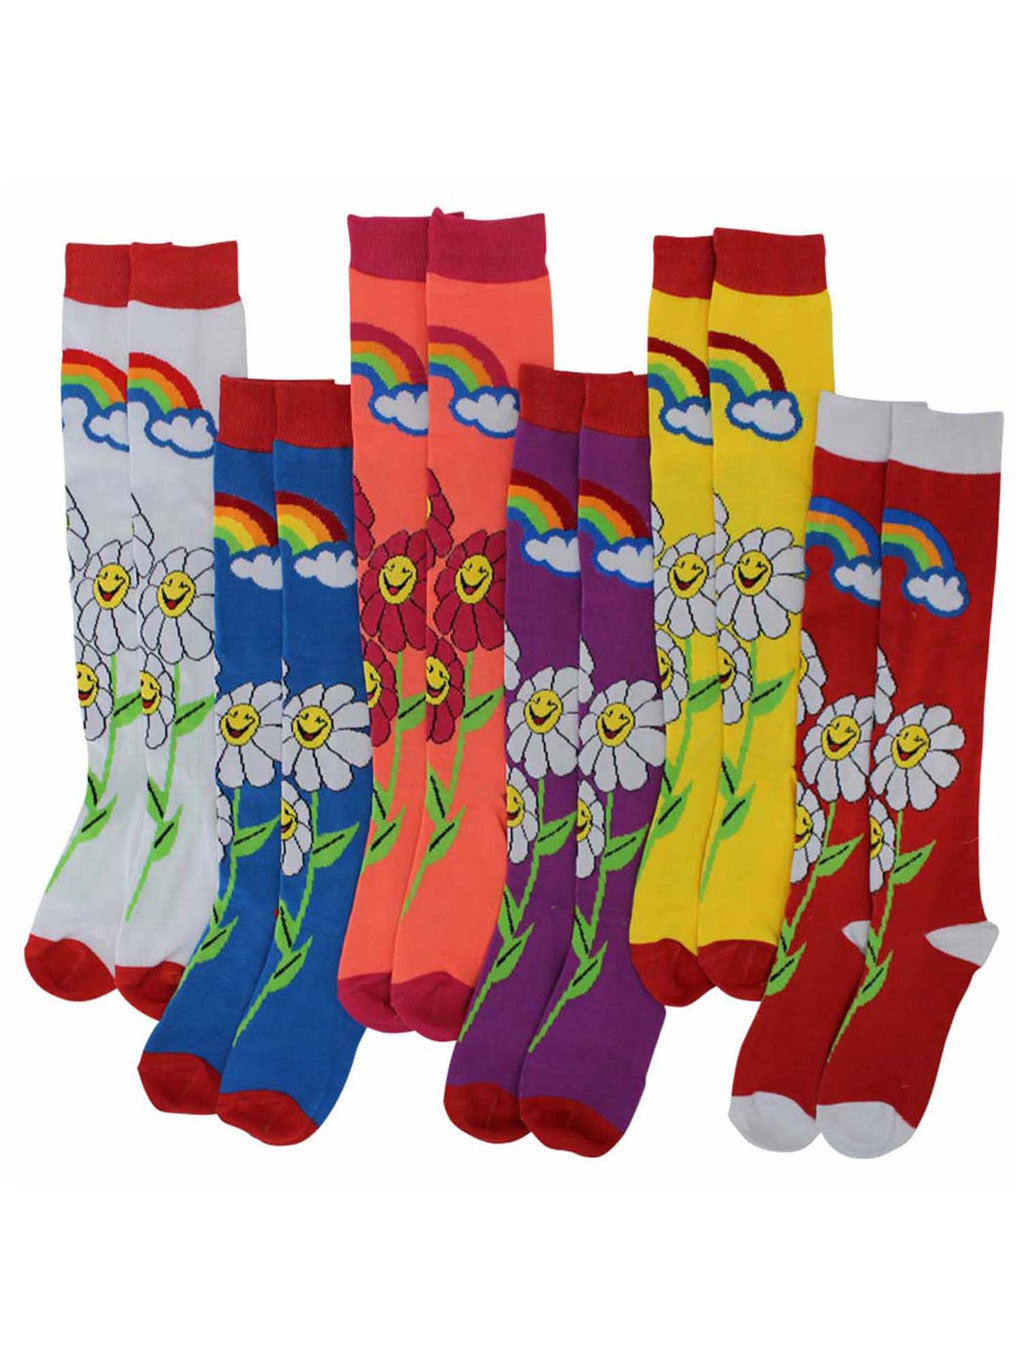 Daisies & Rainbows Crazy 6-Pack Womens Knee High Socks